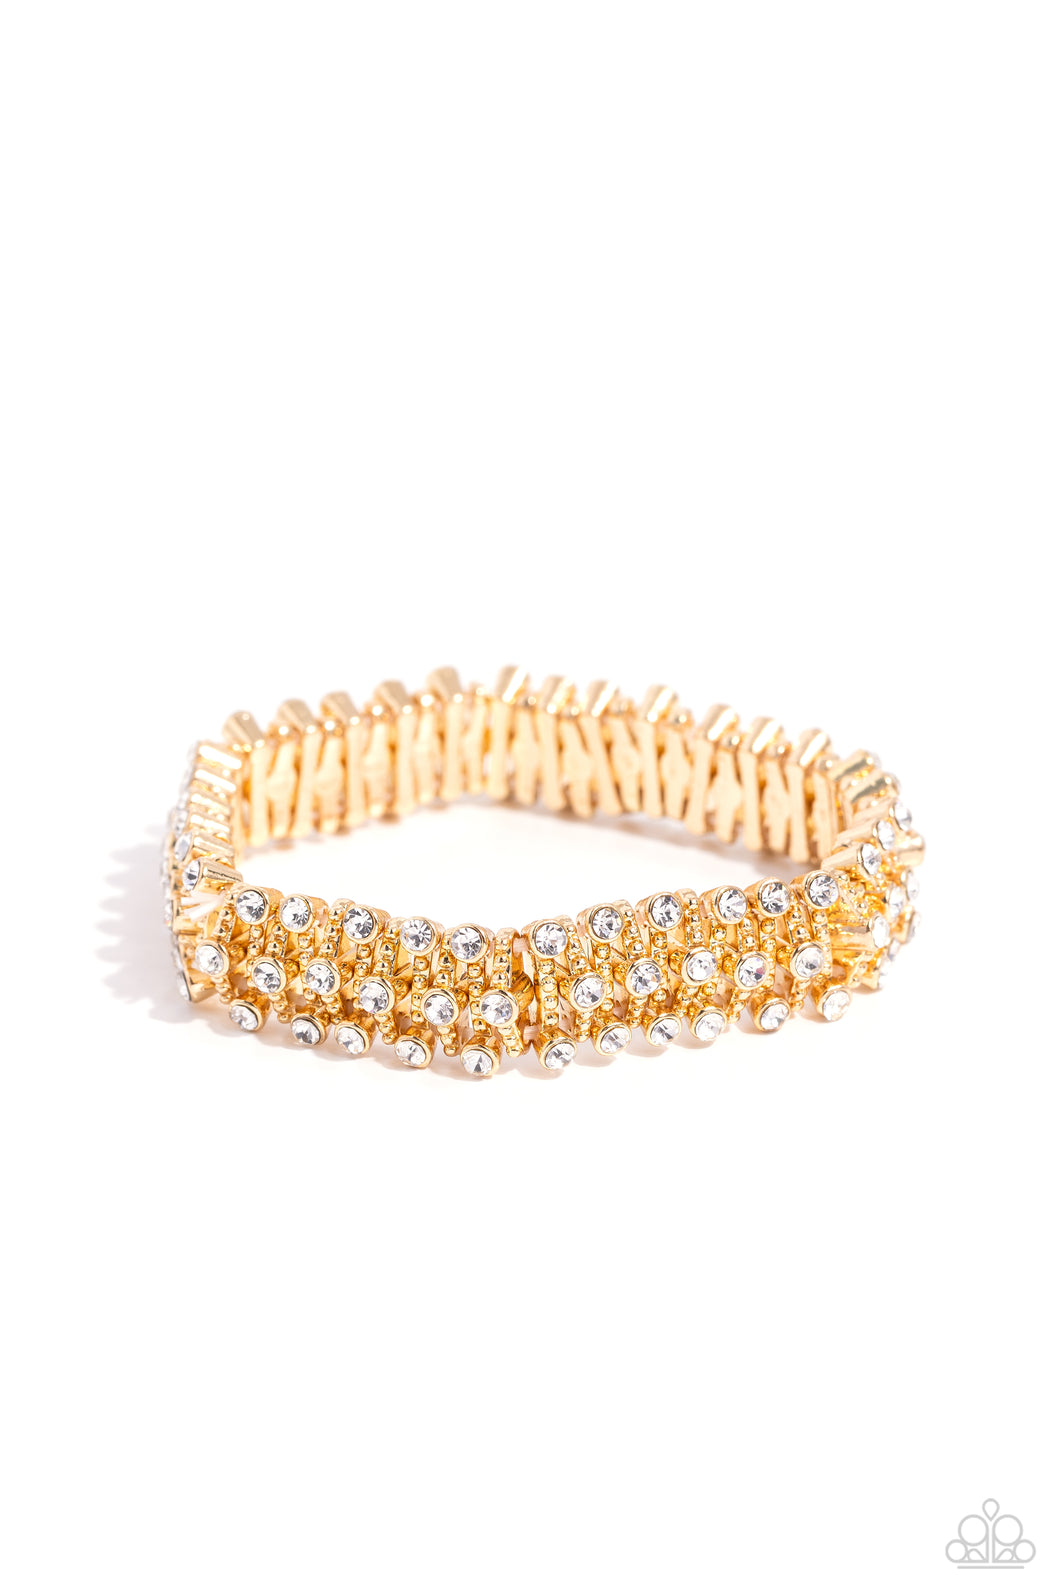 Corporate Confidence - Gold Bracelet - Paparazzi - Dare2bdazzlin N Jewelry